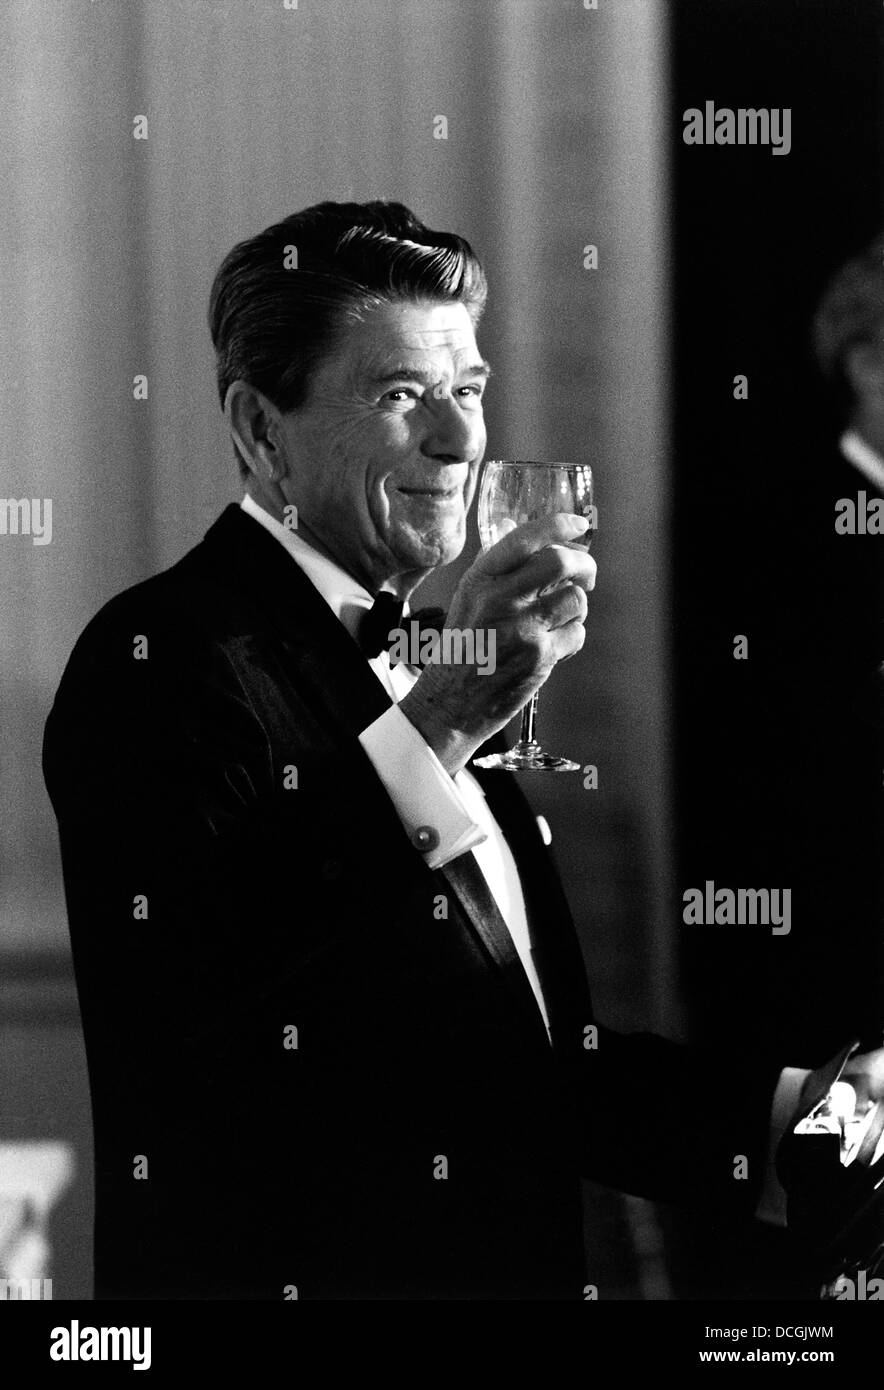 Digitally restored American history photo of President Ronald Reagan making a toast. Stock Photo